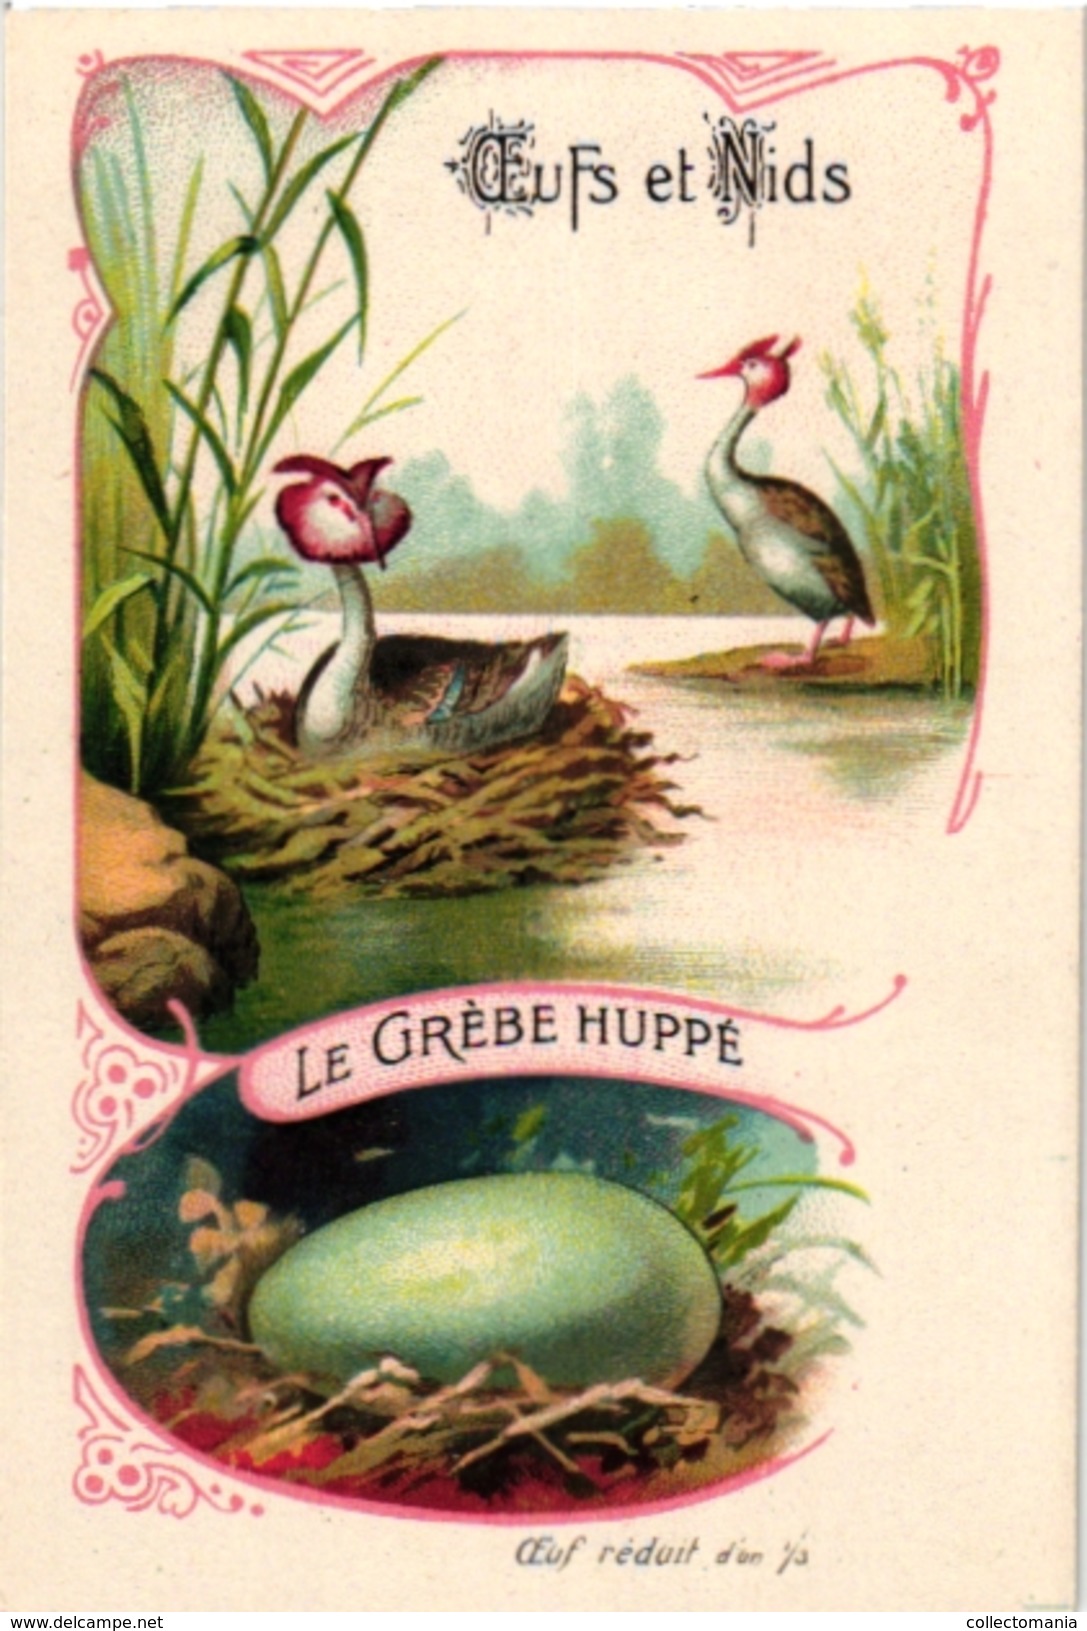 25 Cards chromo litho c1895  Ordre des Chanteurs Birds with  their Nests and  Eggs la Grue Crane Kestler Reed Warbler